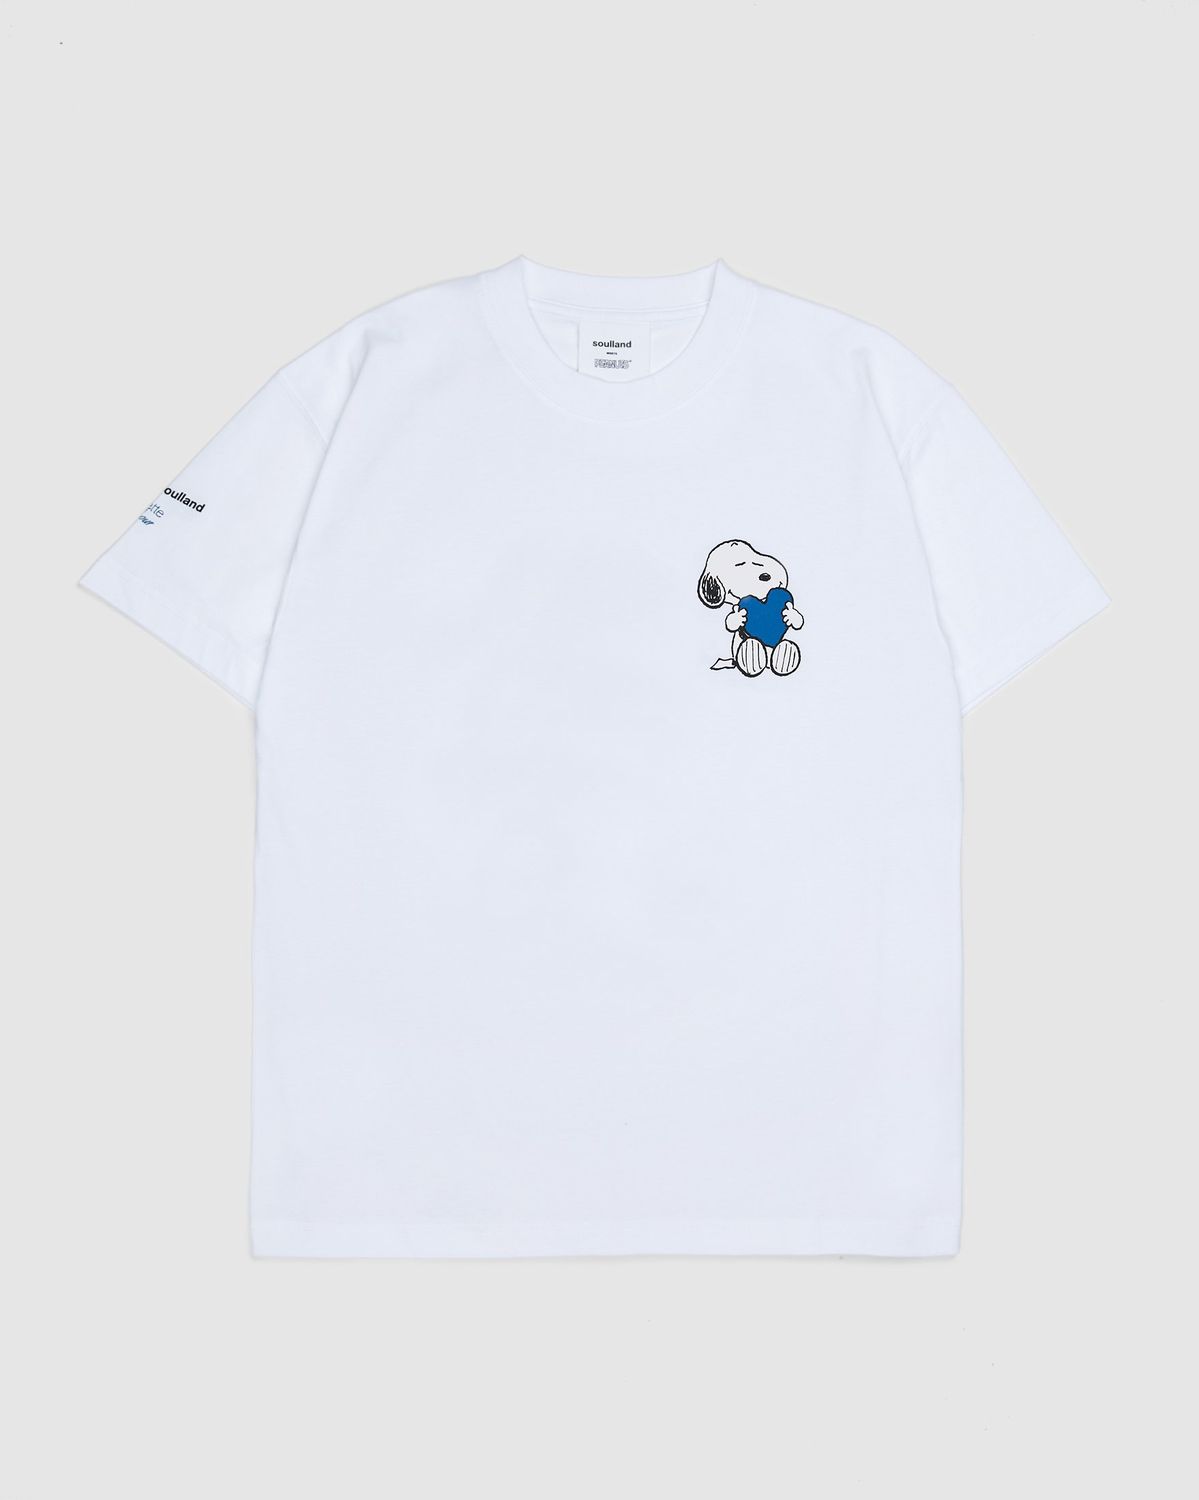 Colette Mon Amour x Soulland – Snoopy Comics White T-Shirt - T-Shirts - White - Image 1